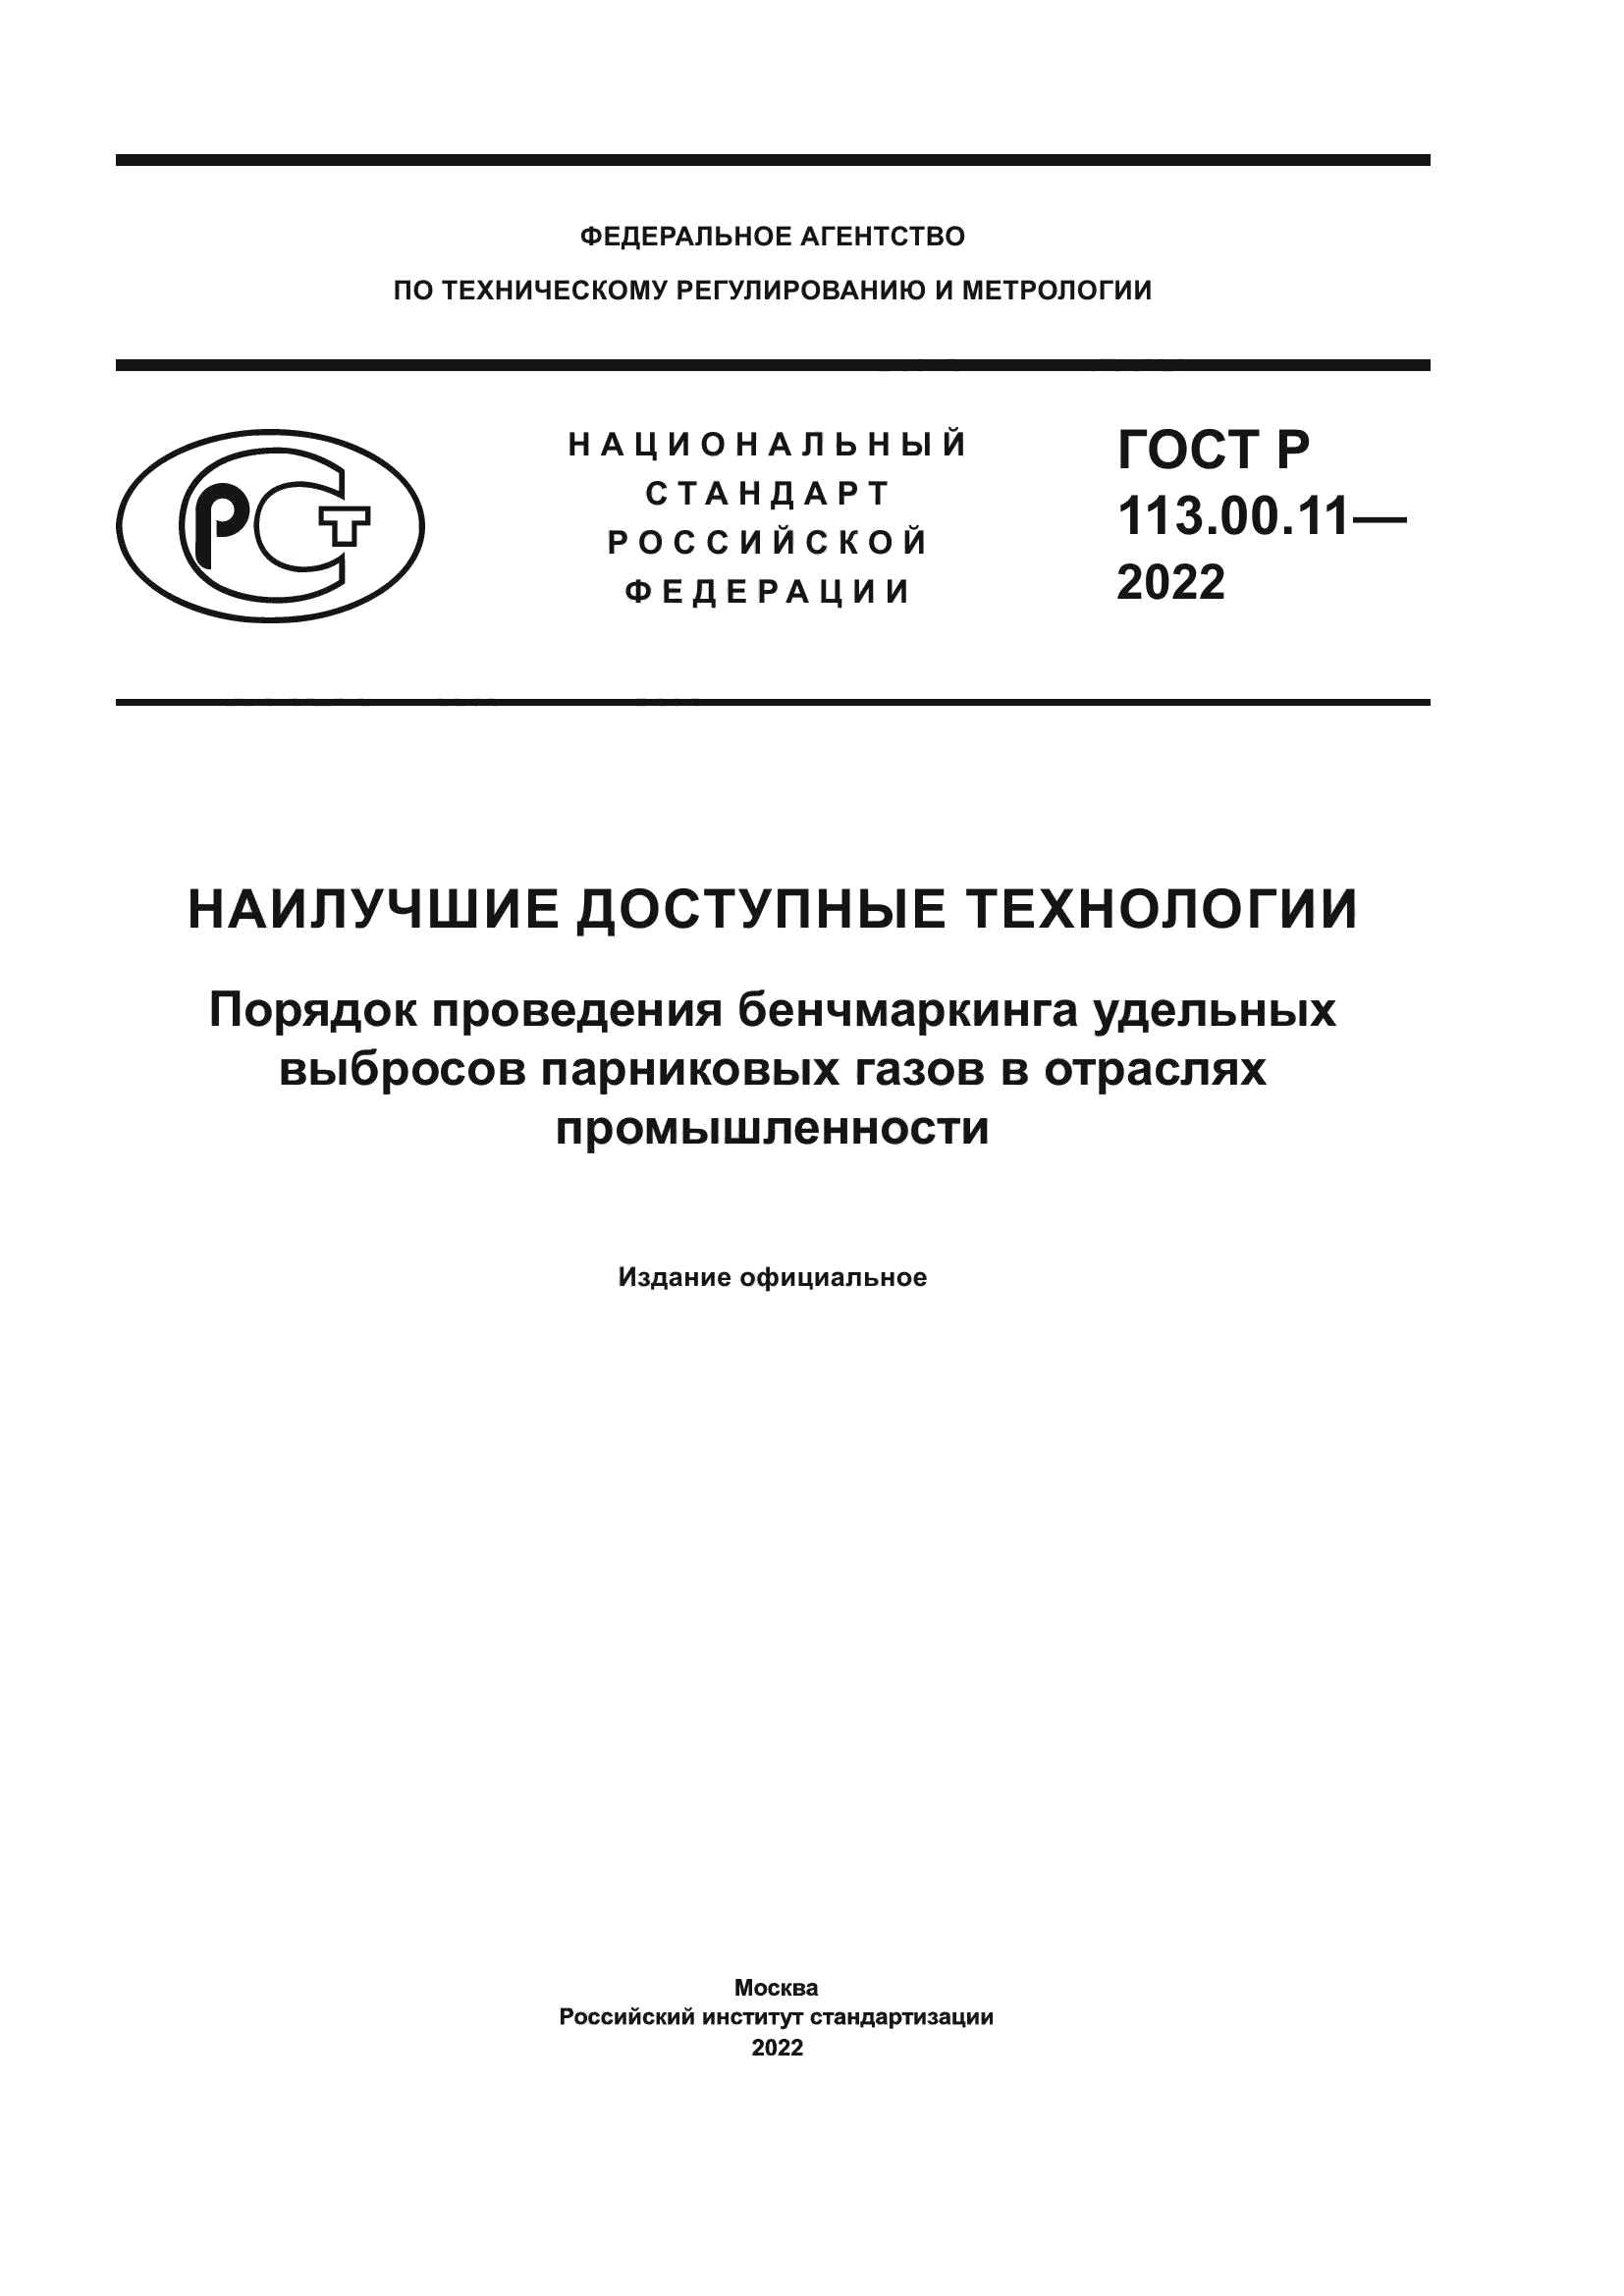 ГОСТ Р 113.00.11-2022